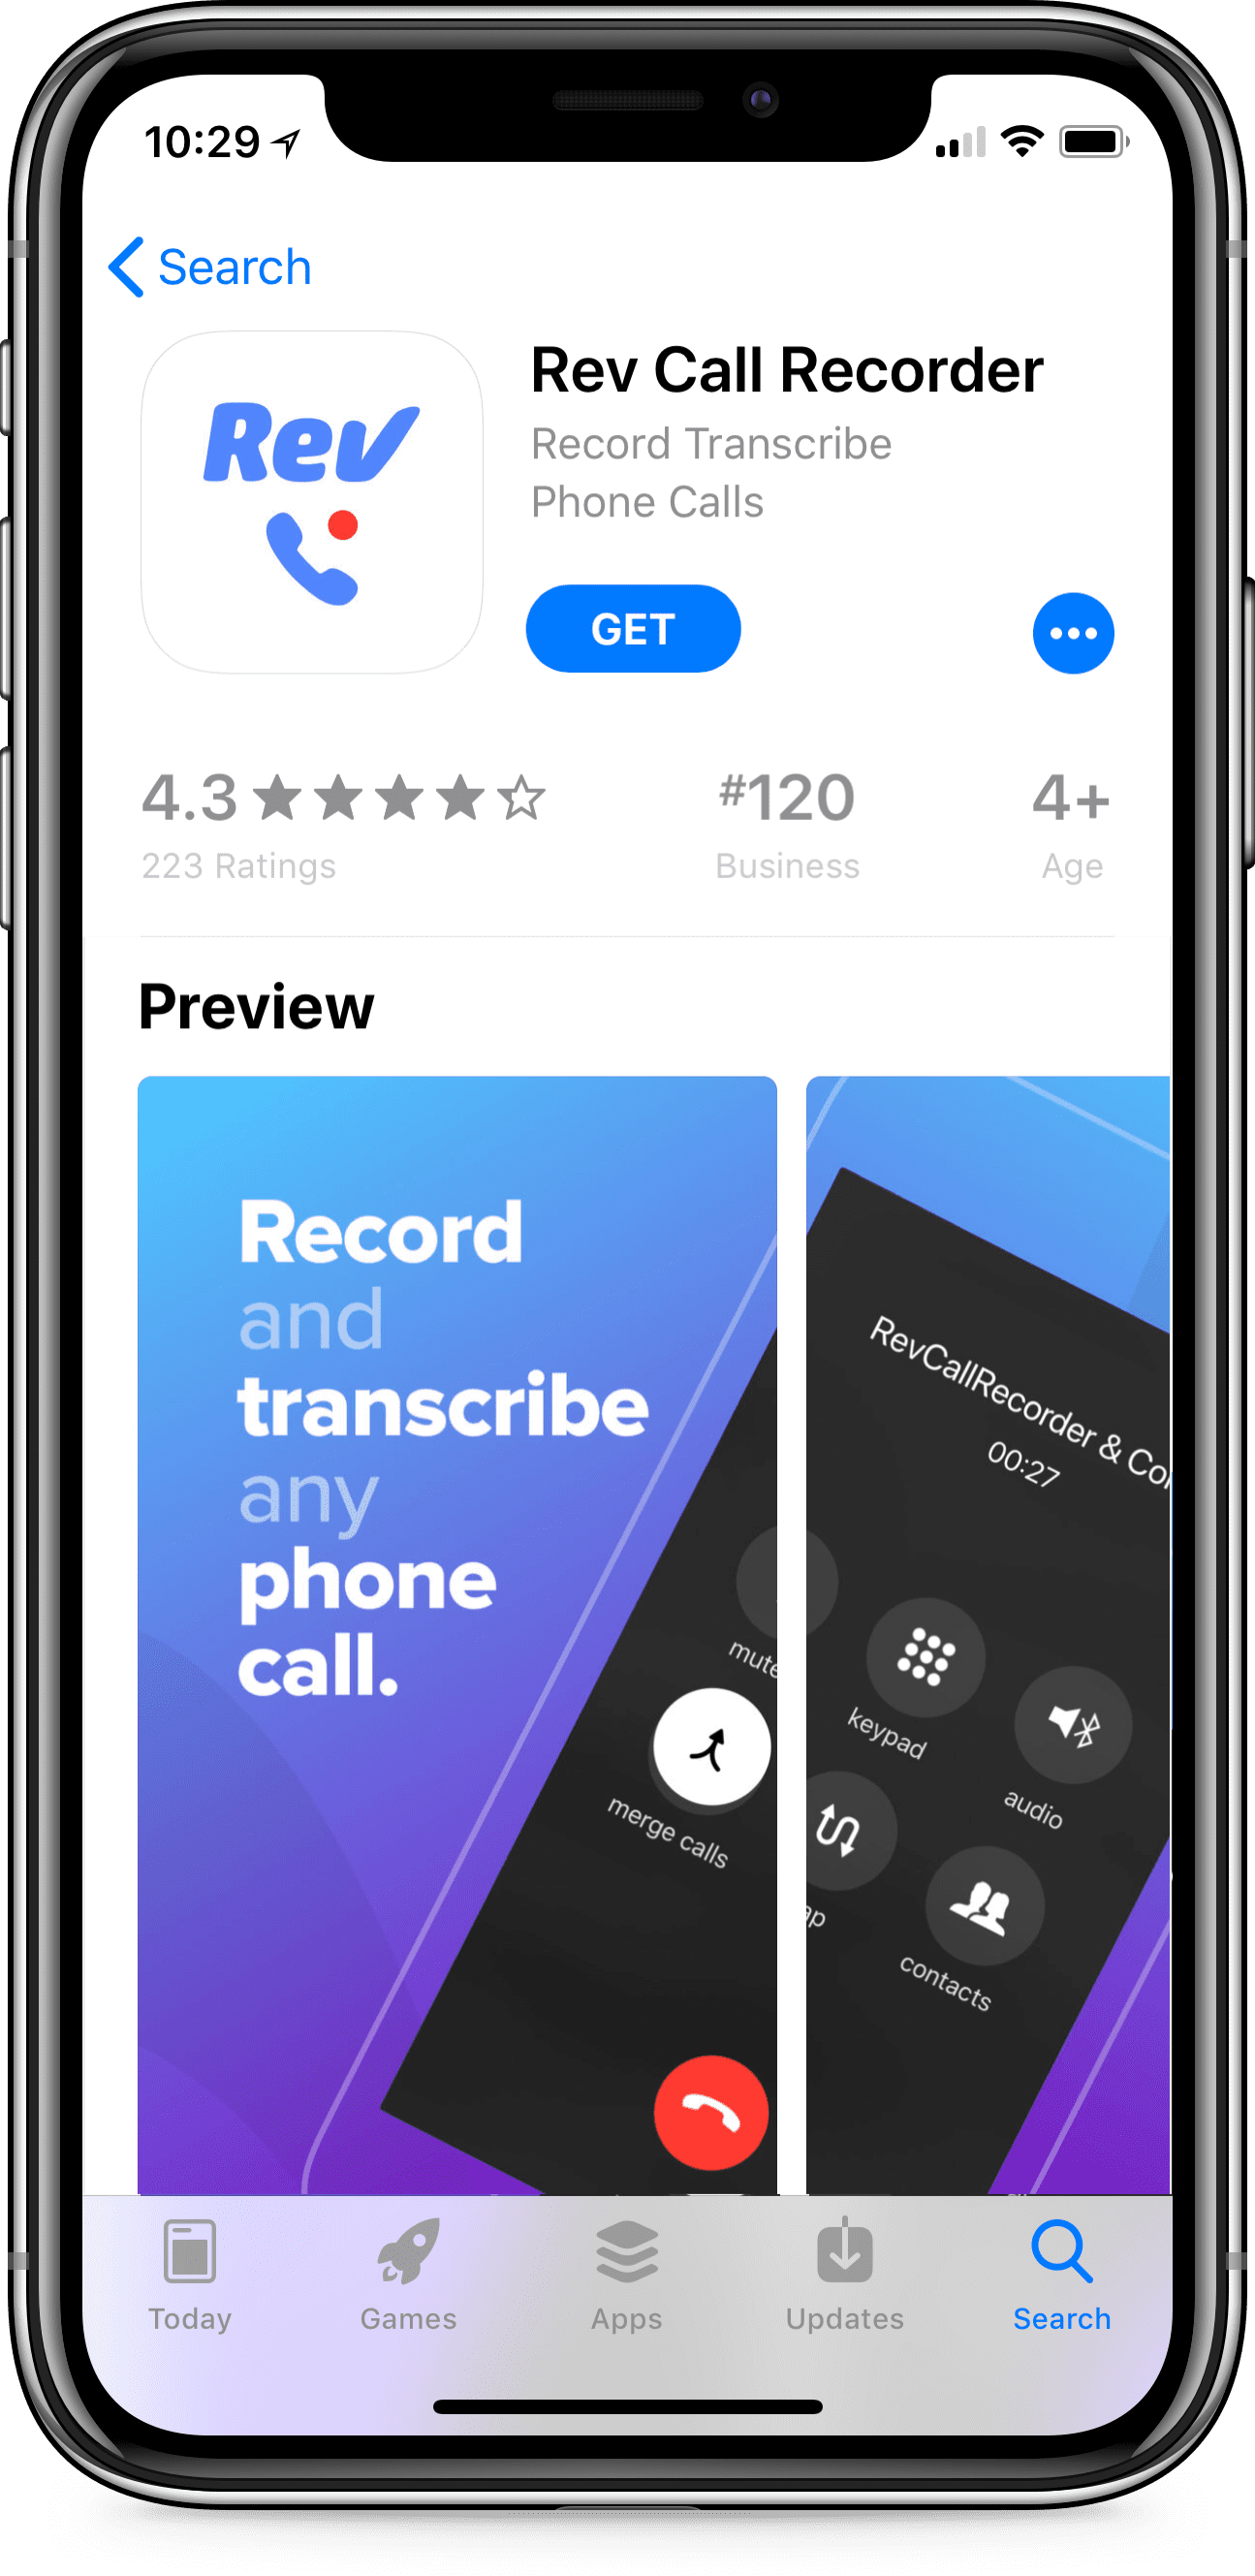 iPhone屏幕下载免费Rev Call Recorder应用程序